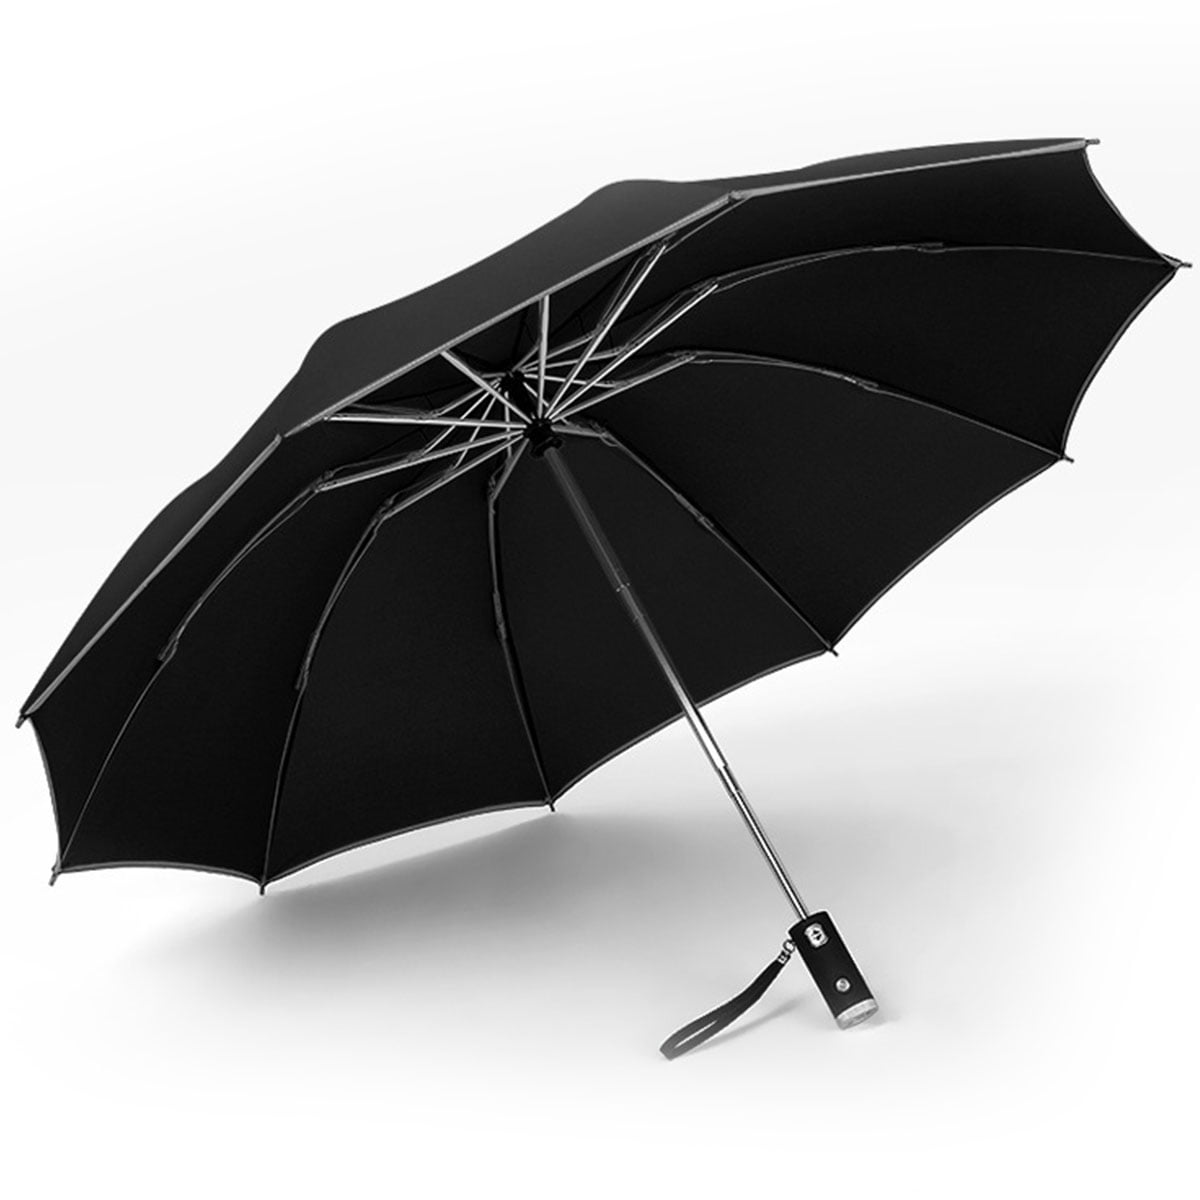 Folding Umbrella Rain Windproof Automatic Sunblock Compact Galaxy for Travel 